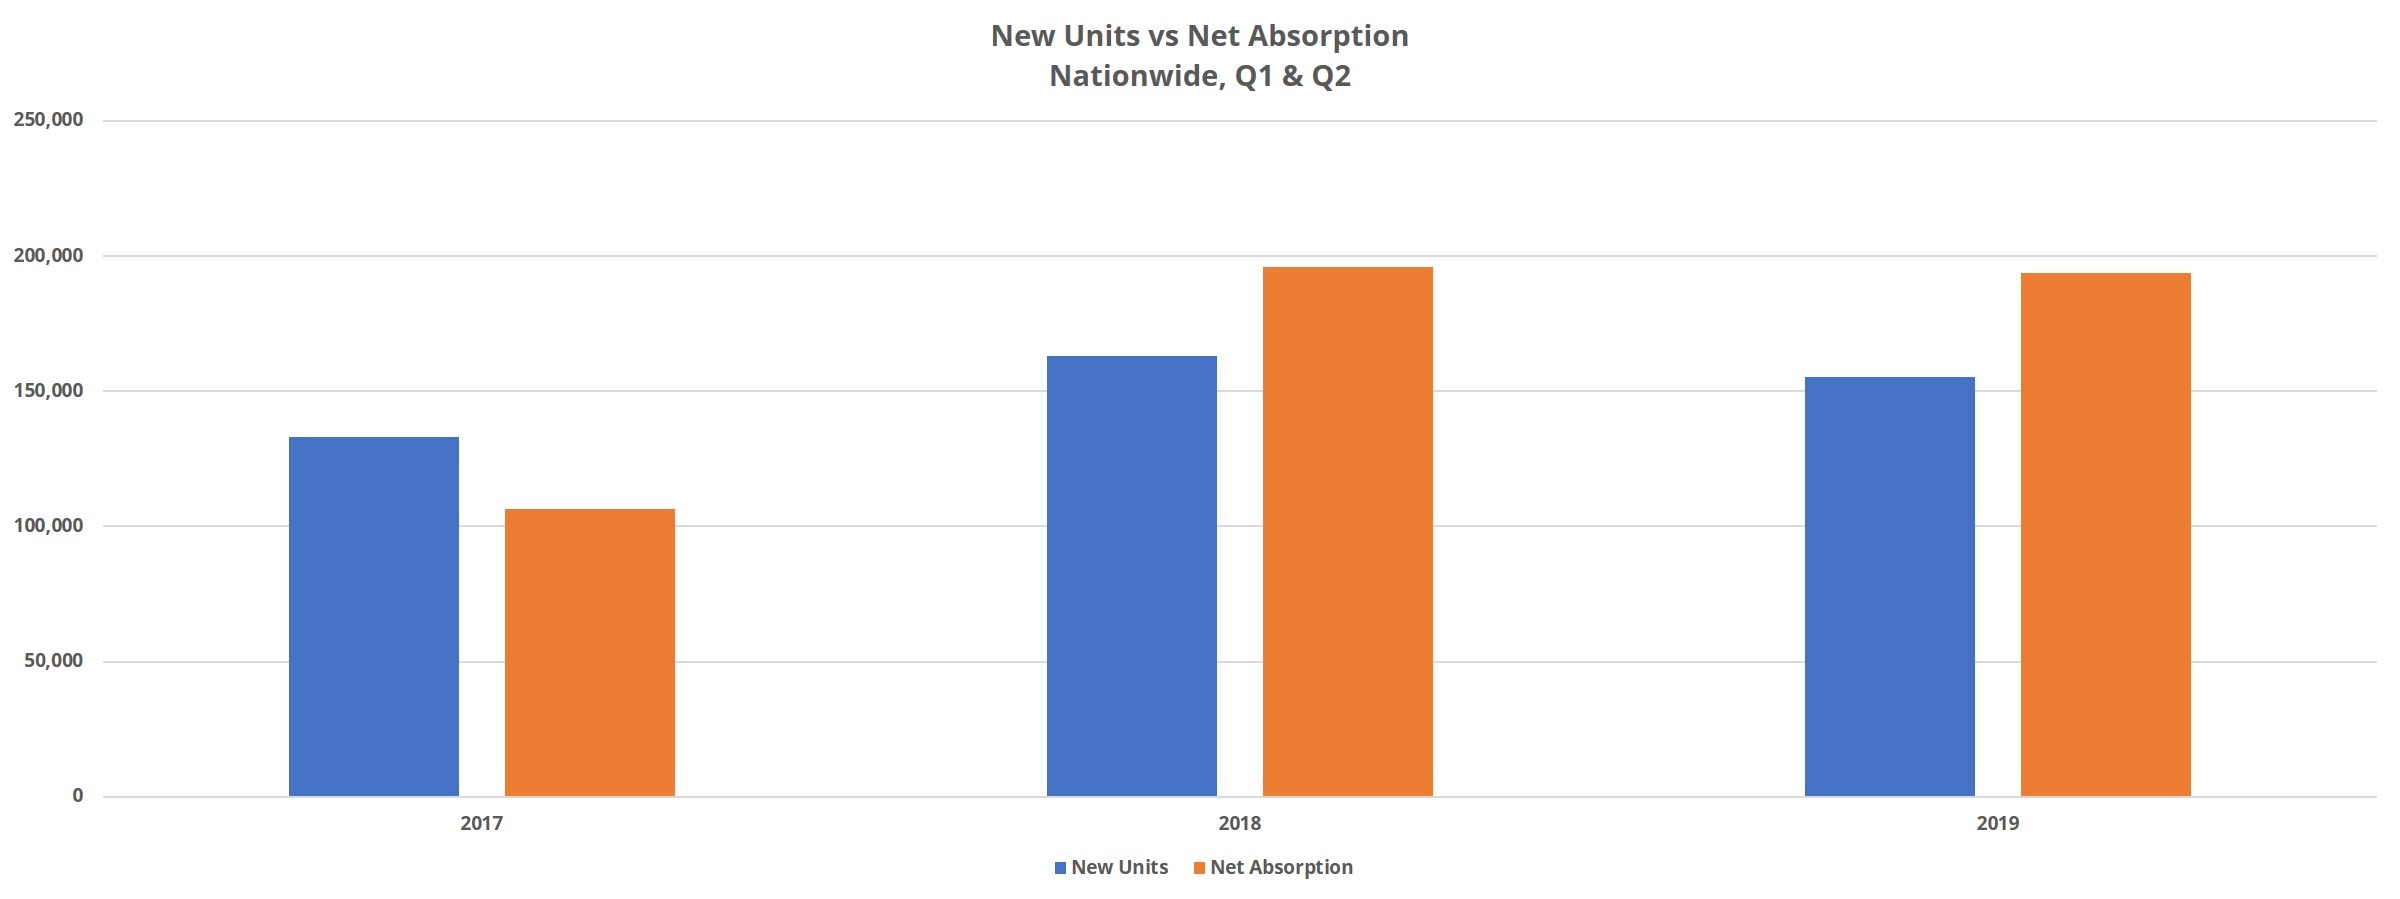 New Units vs Net Absorption Nationwide